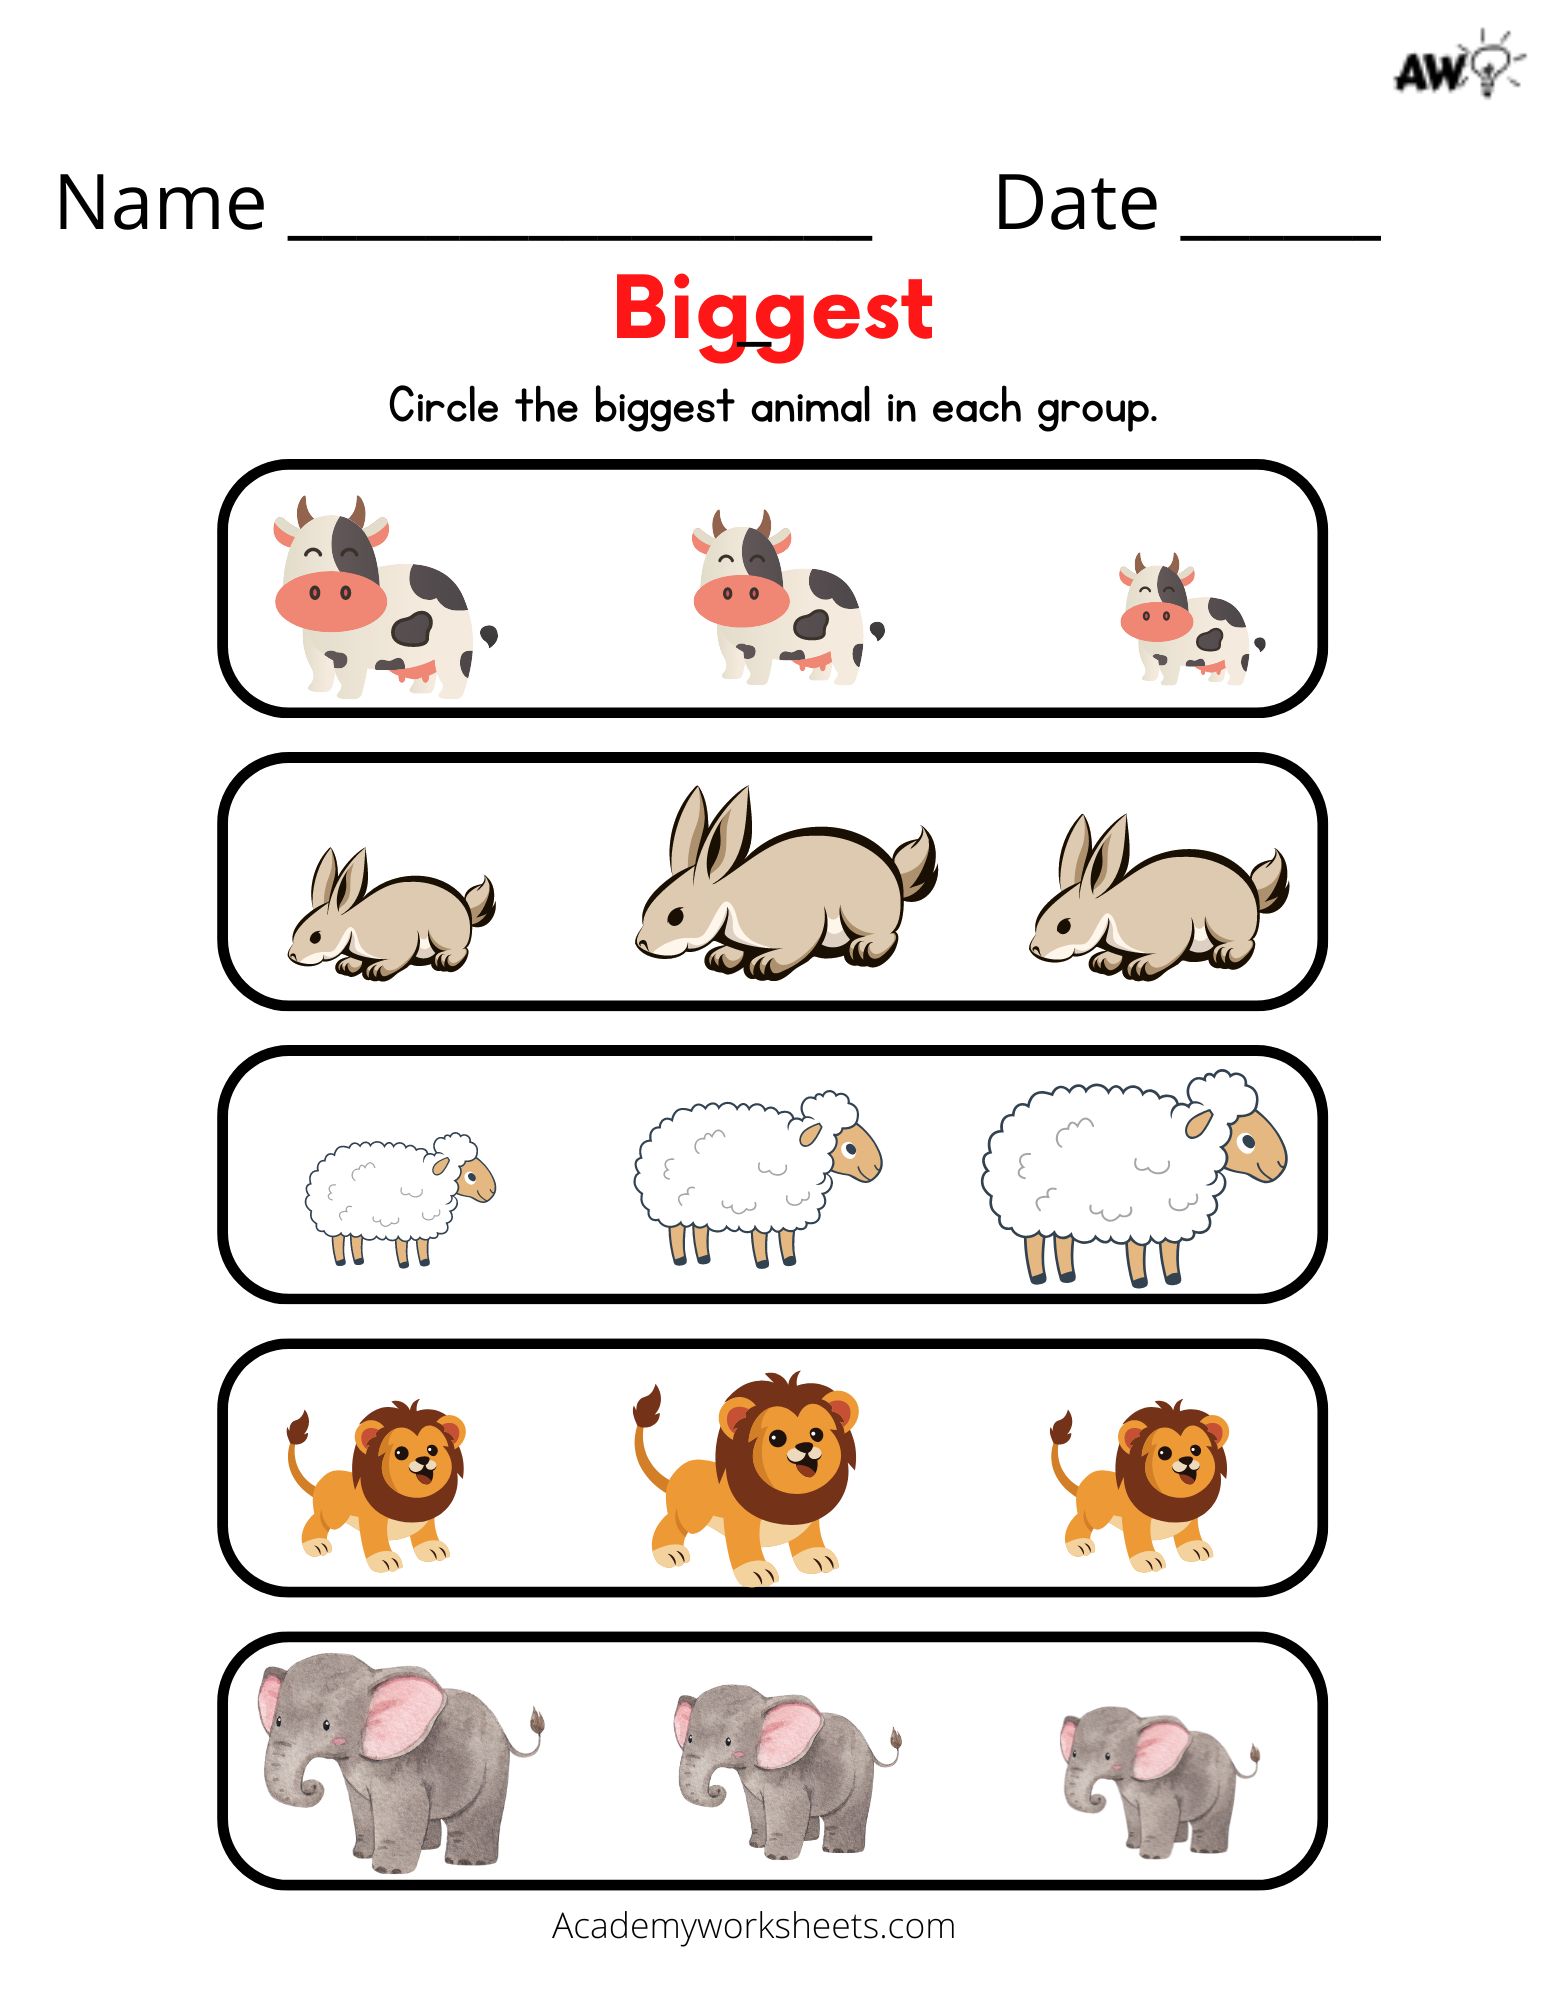 Kindergarten Worksheet 1 Big vs. Small Size comparison Which is